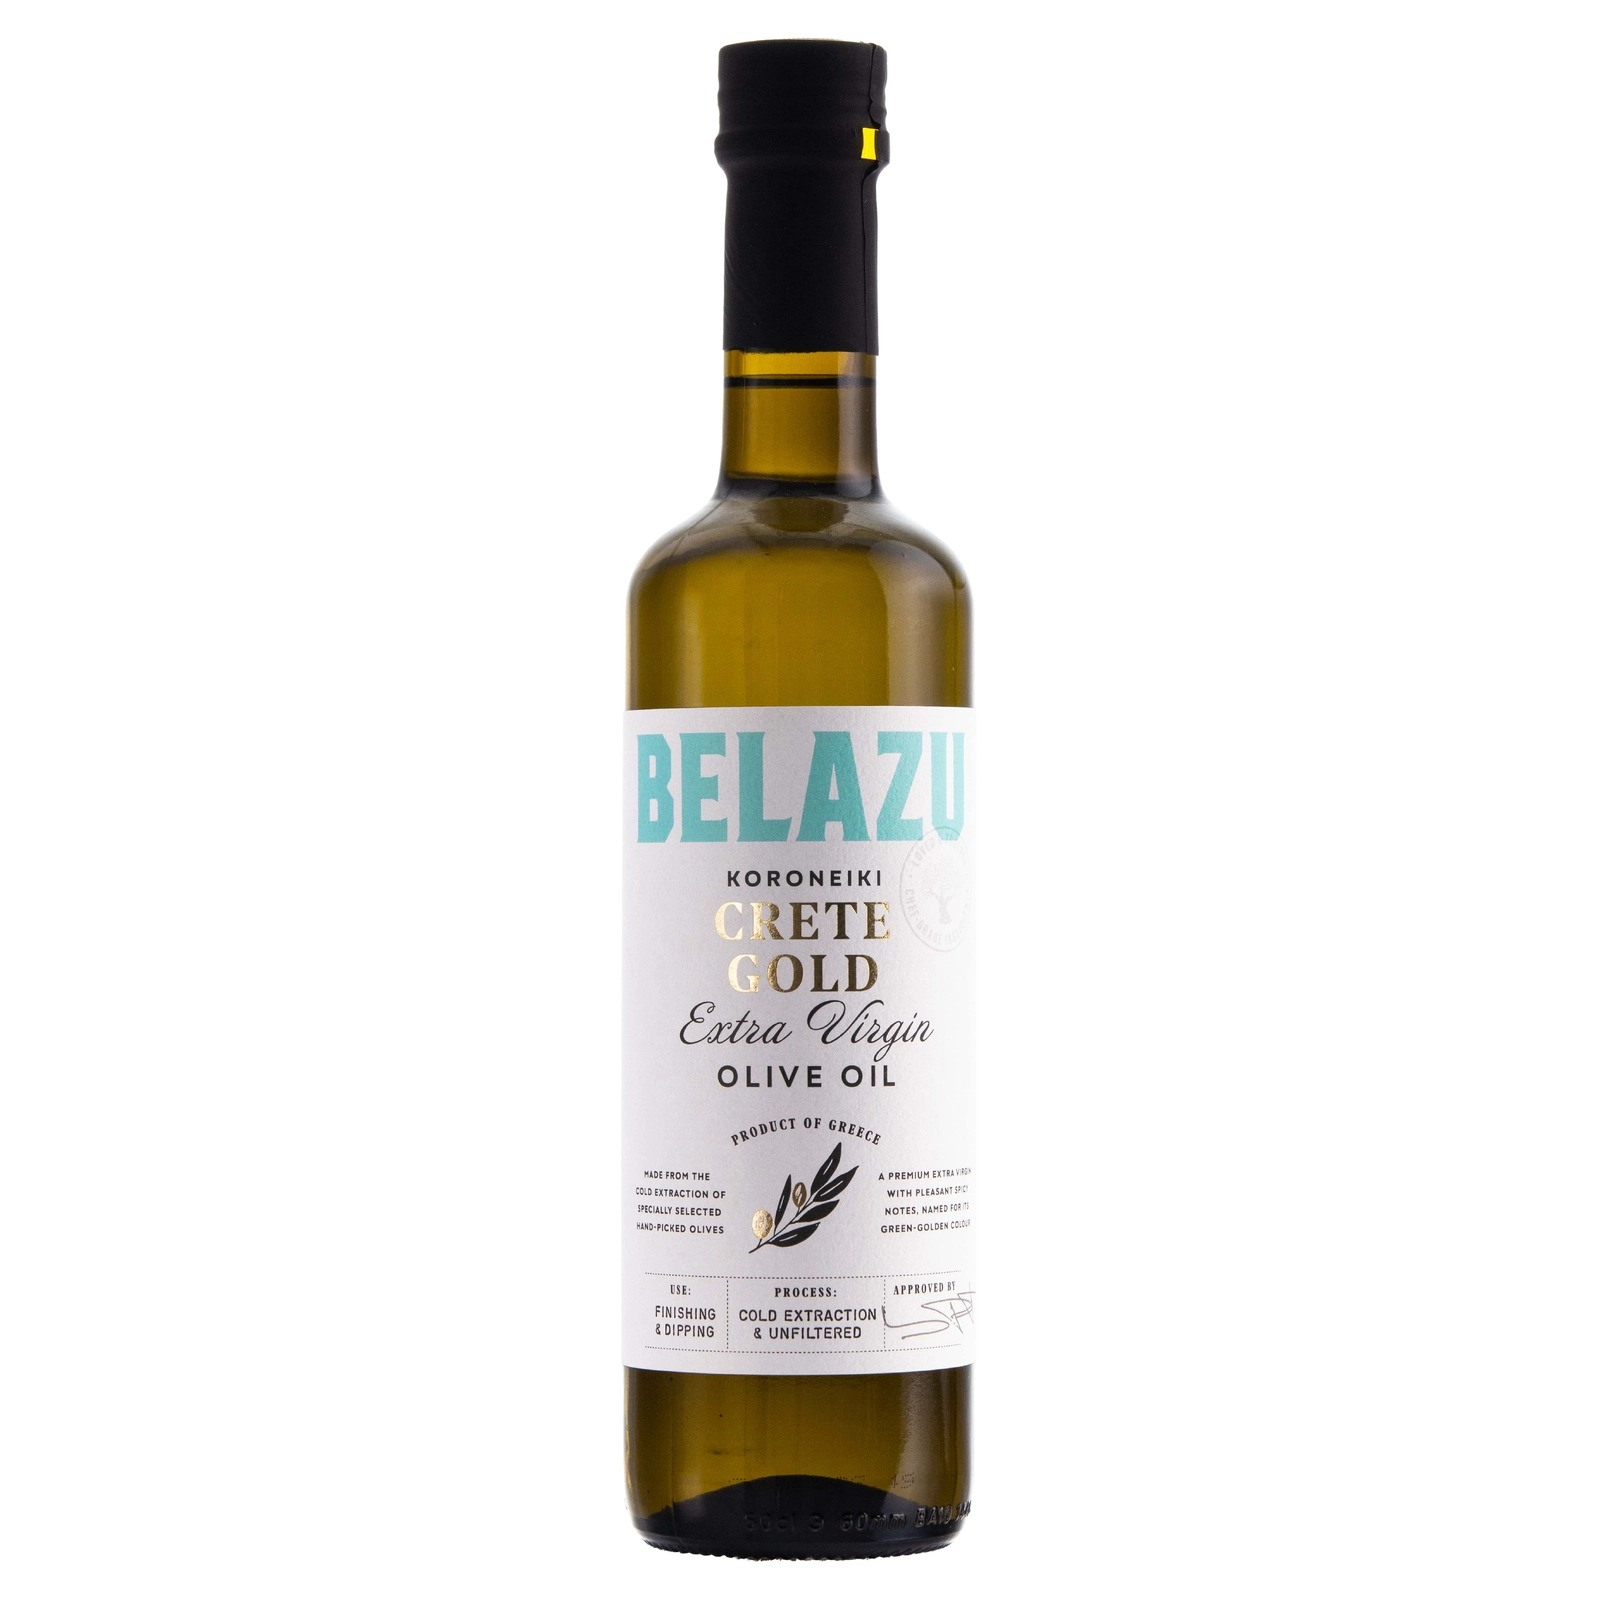 BELAZU Crete Gold Extra Virgin Olive Oil (500g)